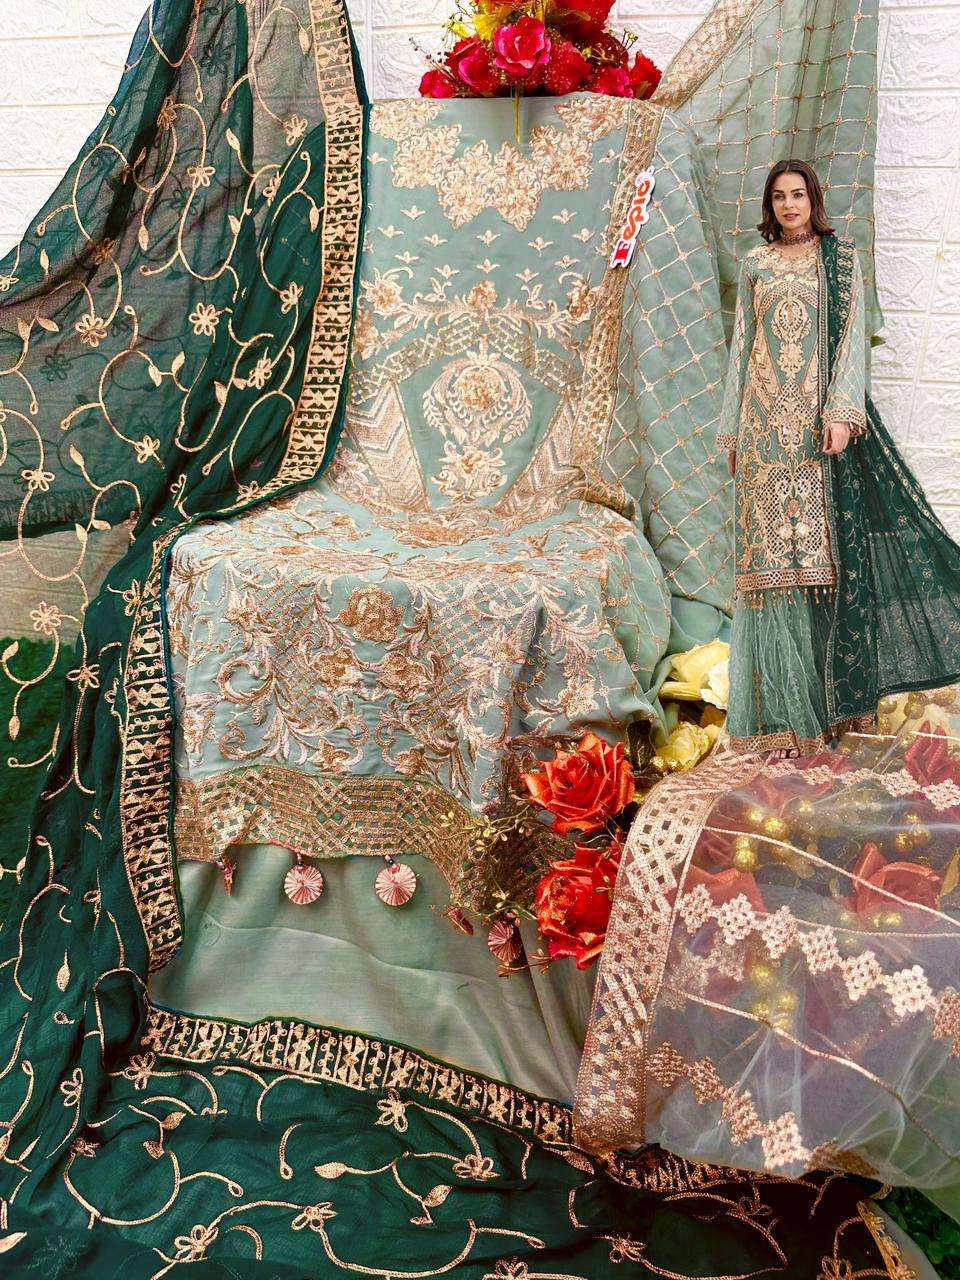 fepic 1552 series bridal look designer pakistani salwar kameez manufacturer surat 